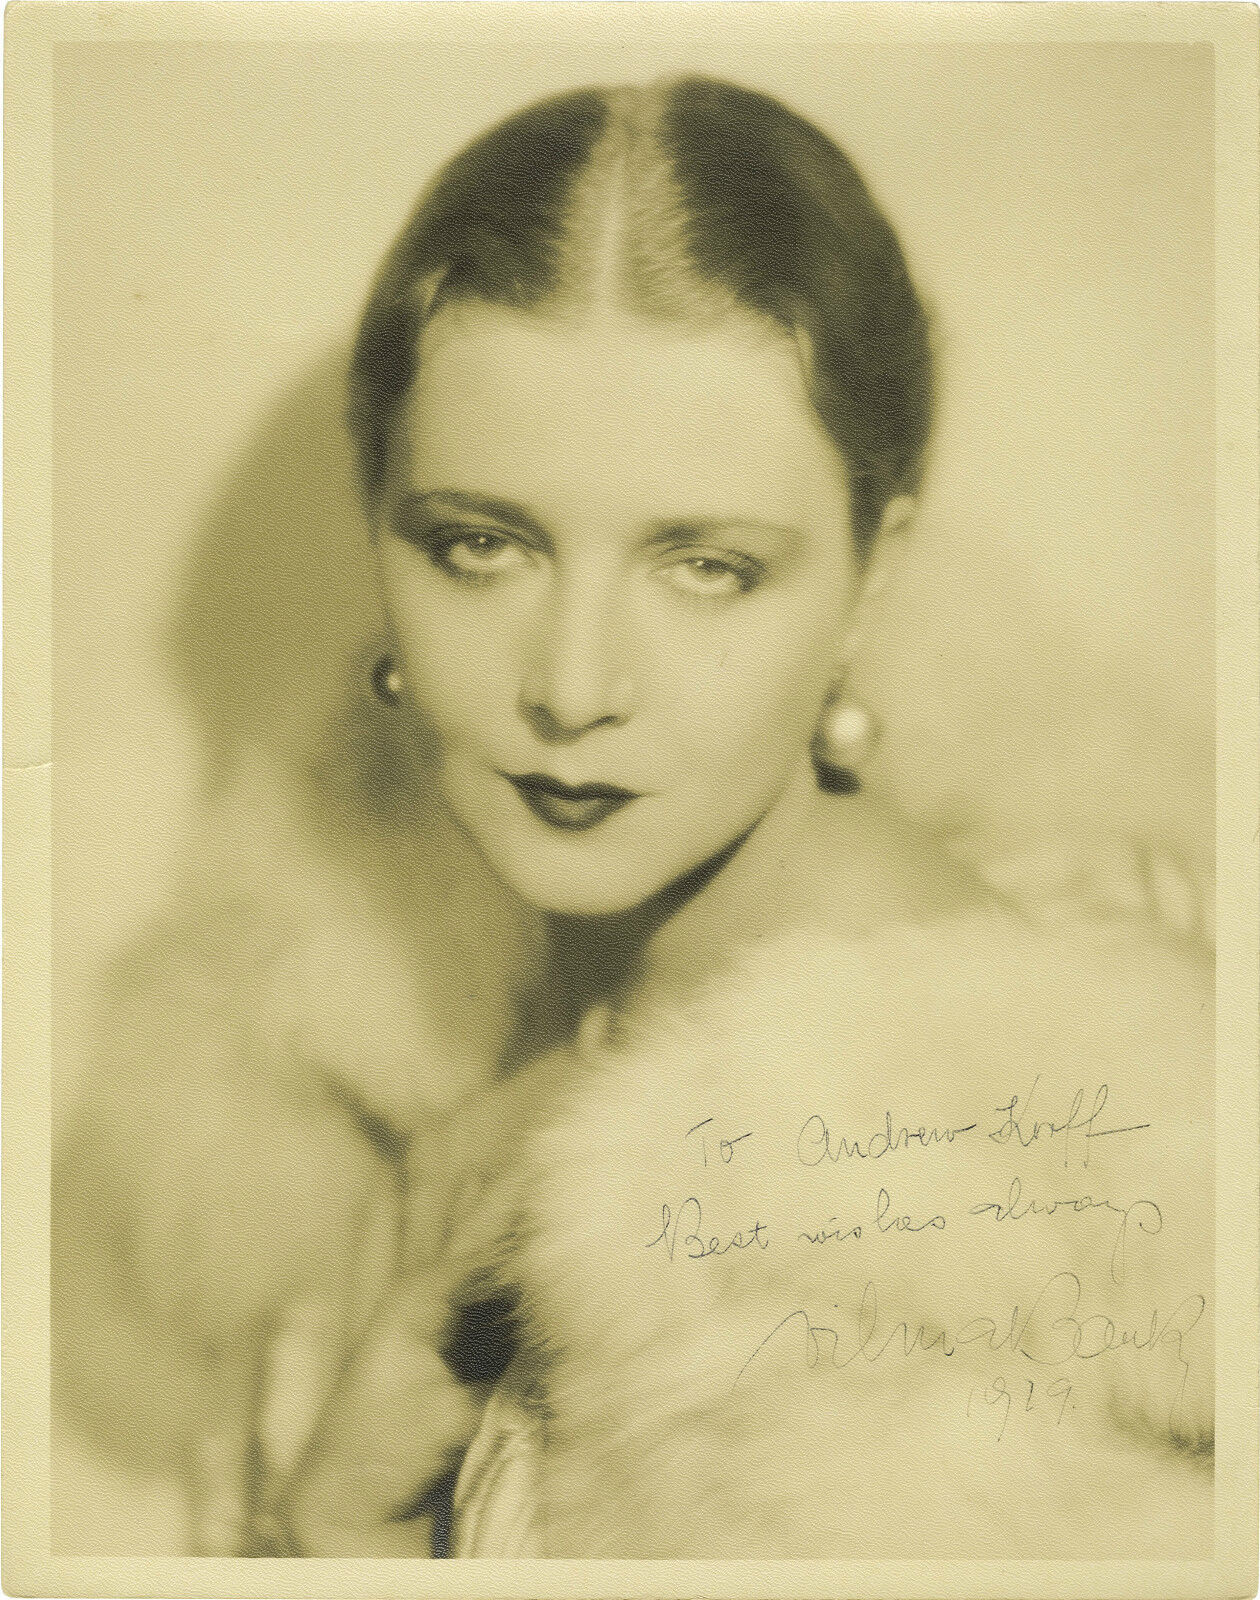 VILMA BANKY Signed Photo Poster paintinggraph - Silent Film Star Actress - preprint